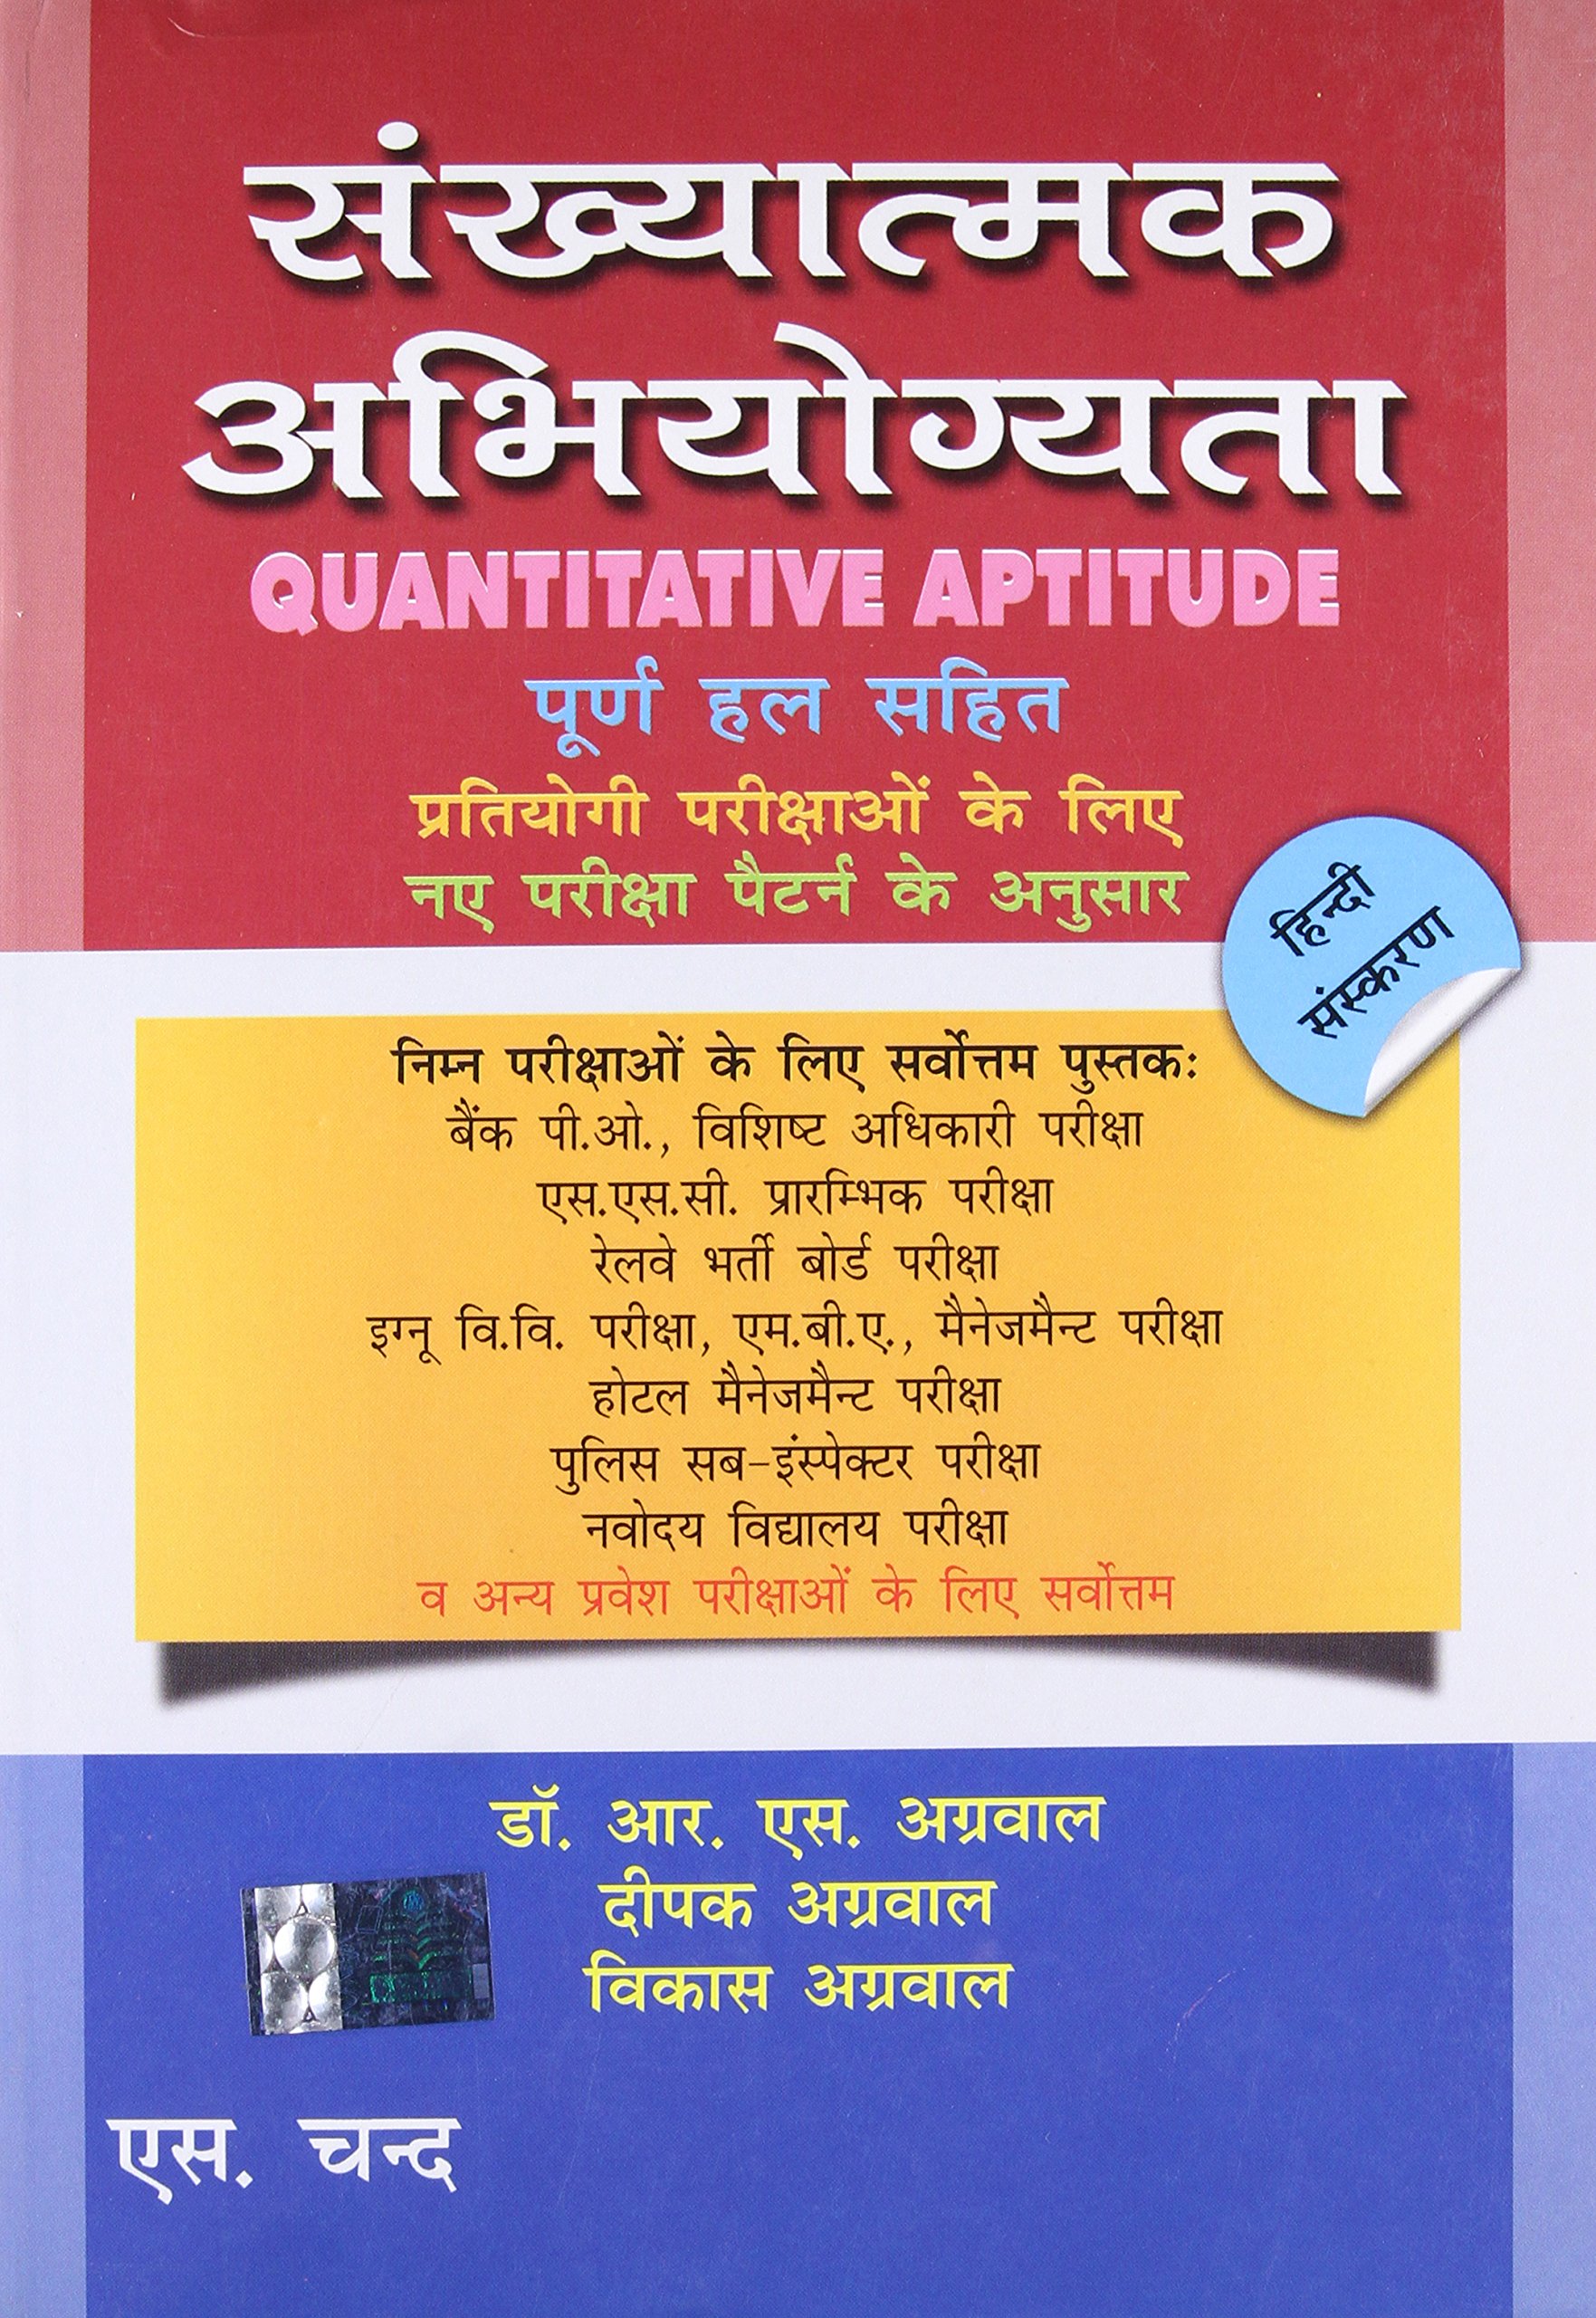 sankhyatmak-abhiyogyta-quantitative-aptitude-in-hindi-babajibook